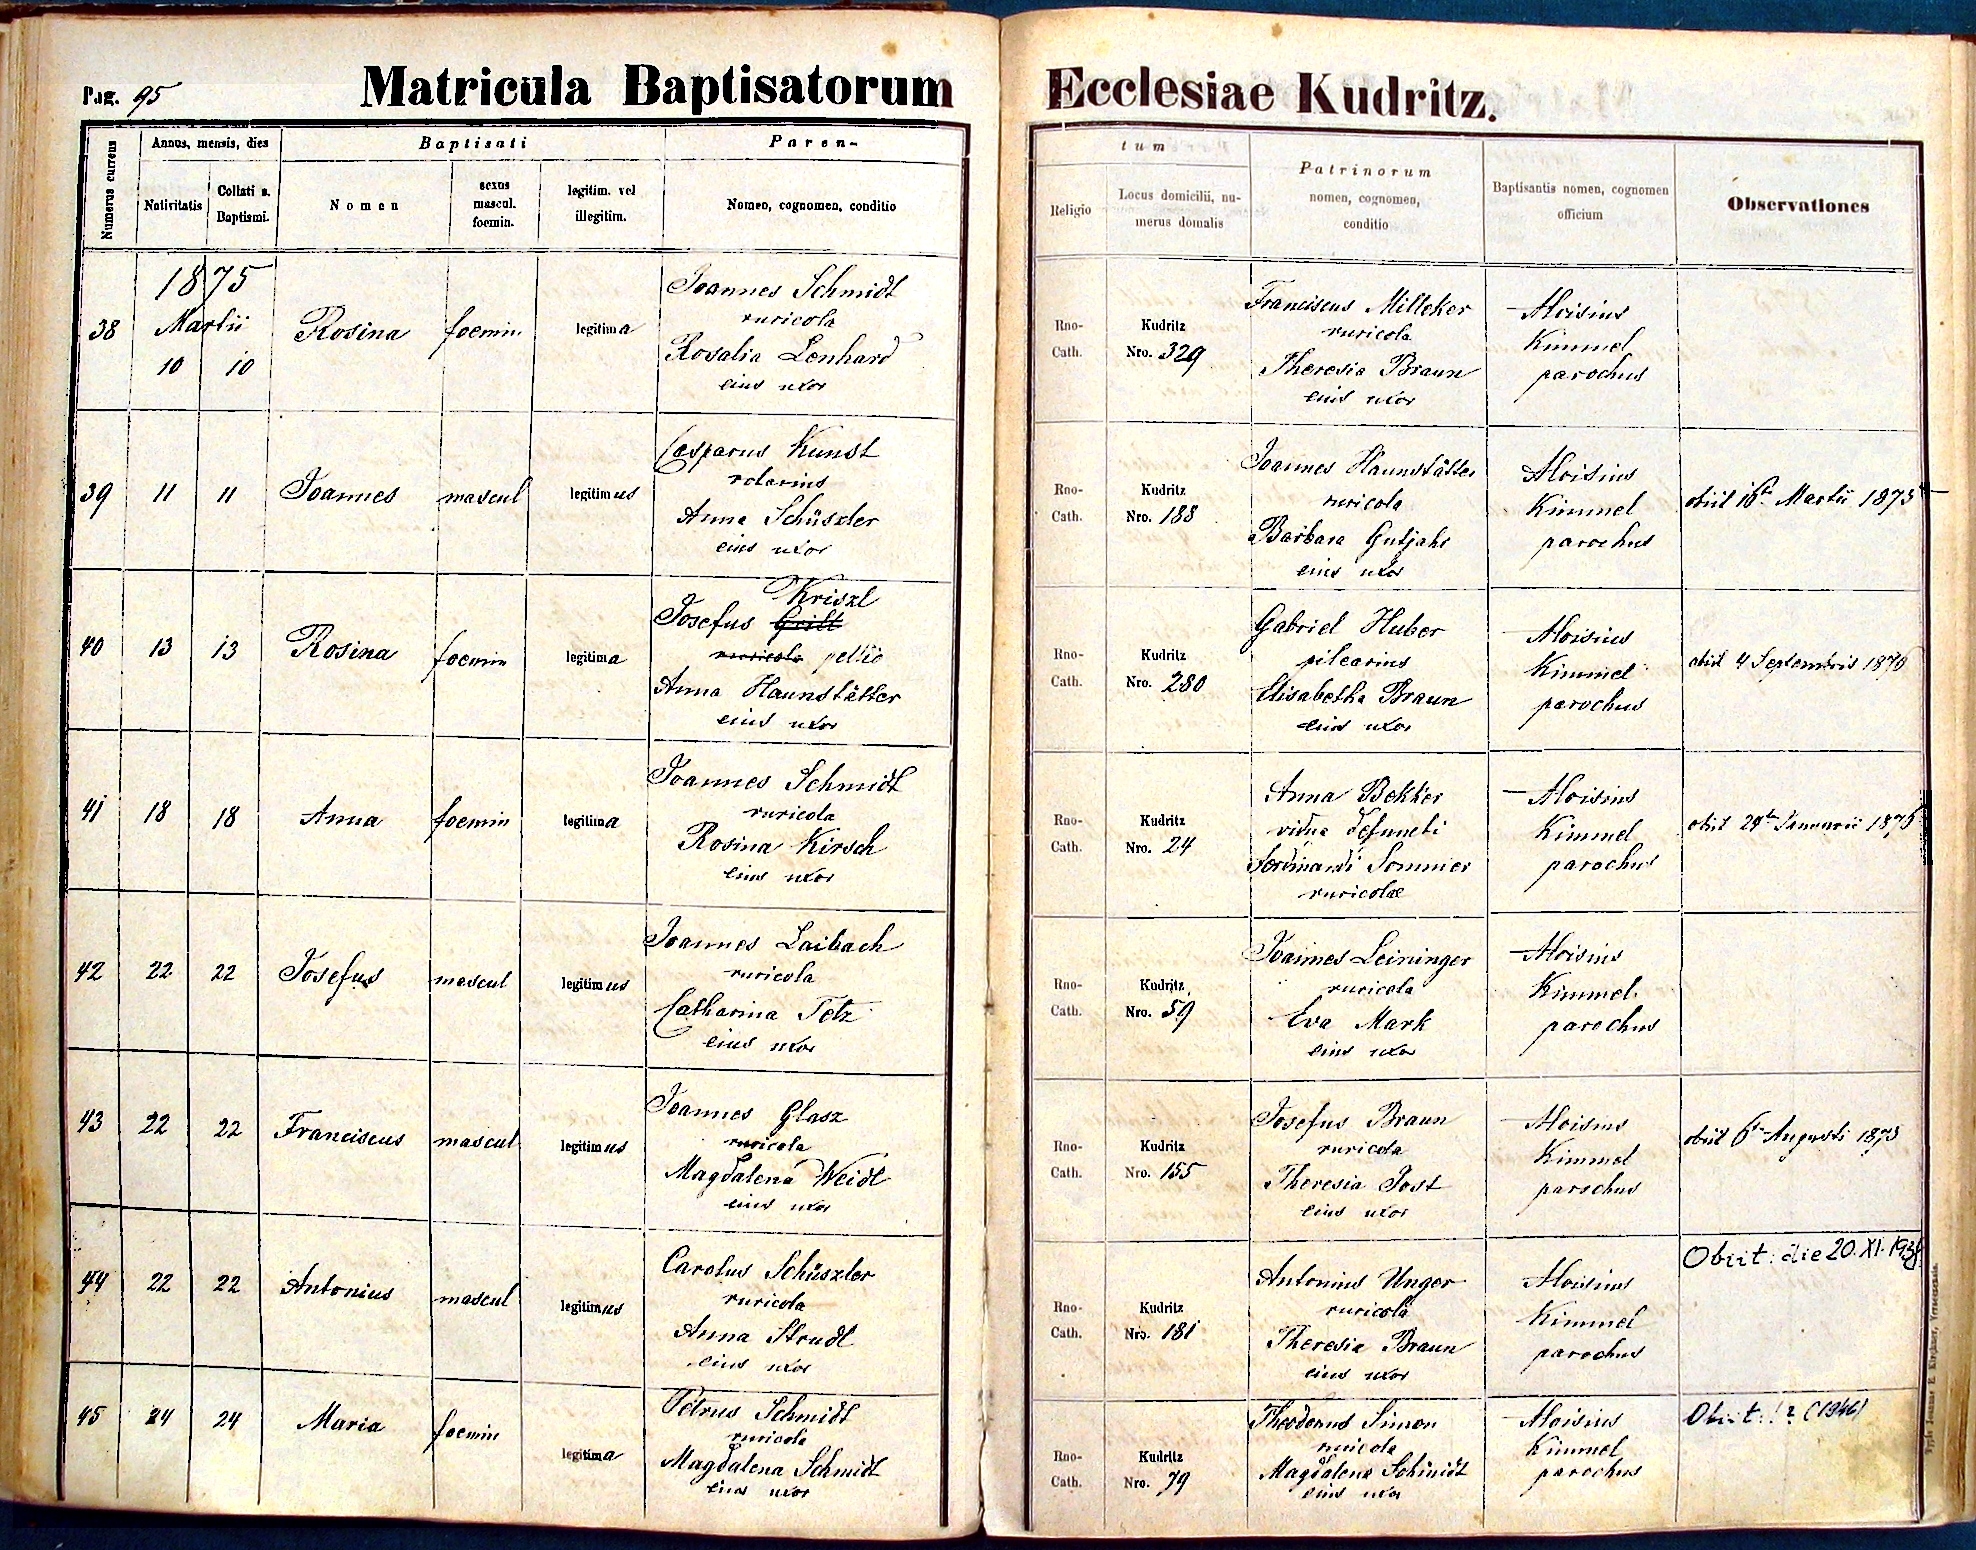 images/church_records/BIRTHS/1884-1899B/1890/095